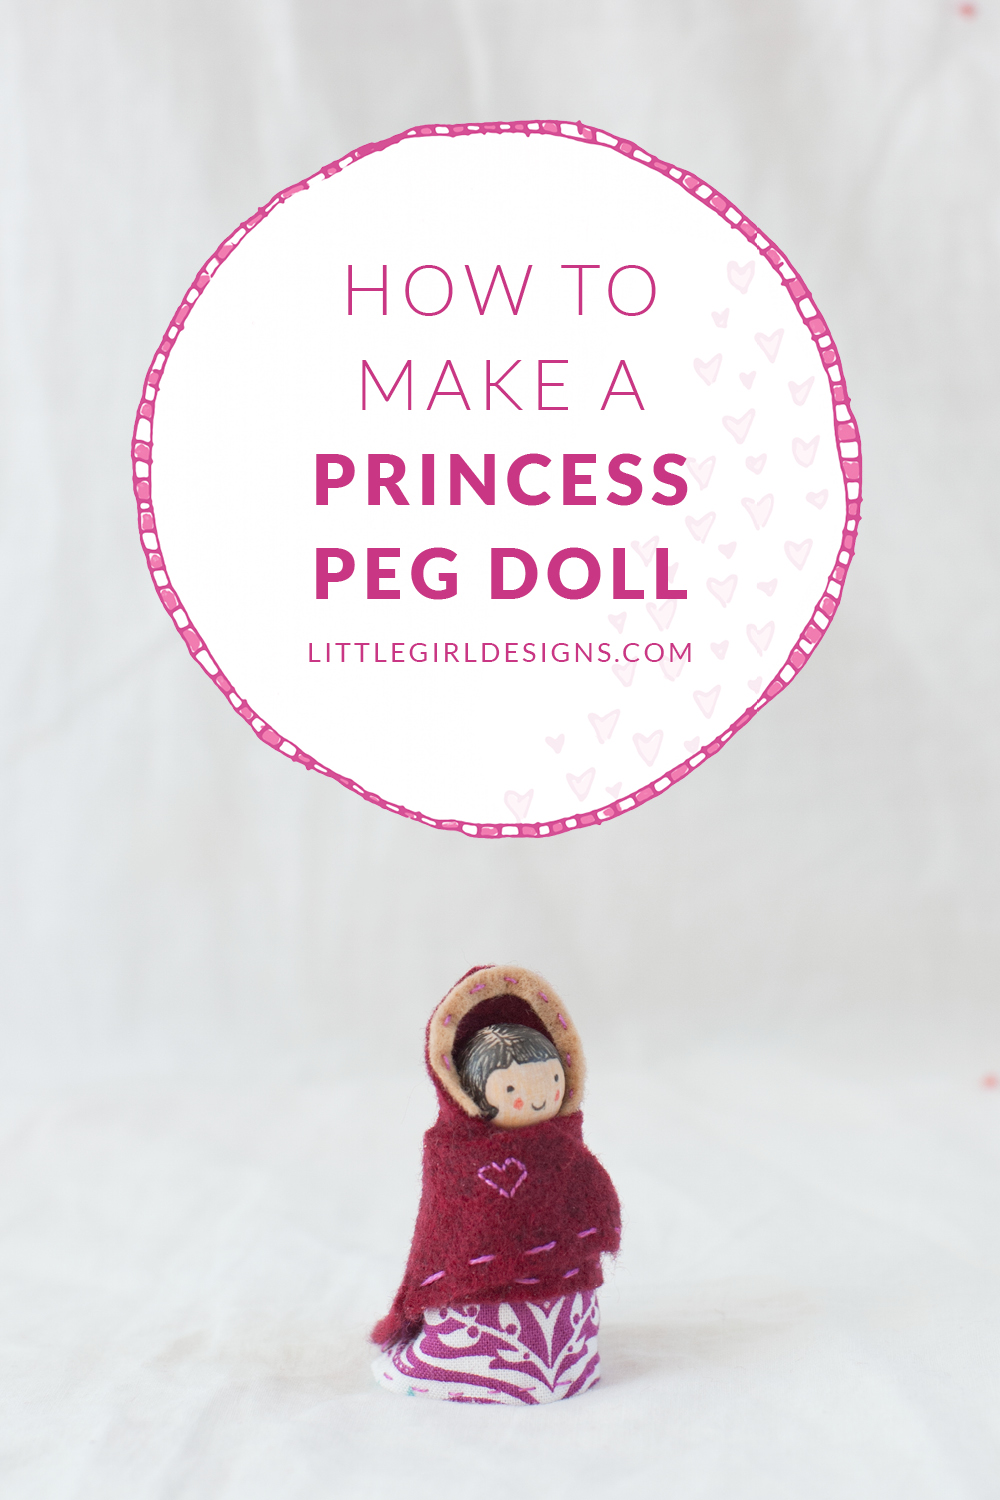 Use up old scraps and make a darling Princess Peg Doll @littlegirldesigns.com. #pegdoll #crafts